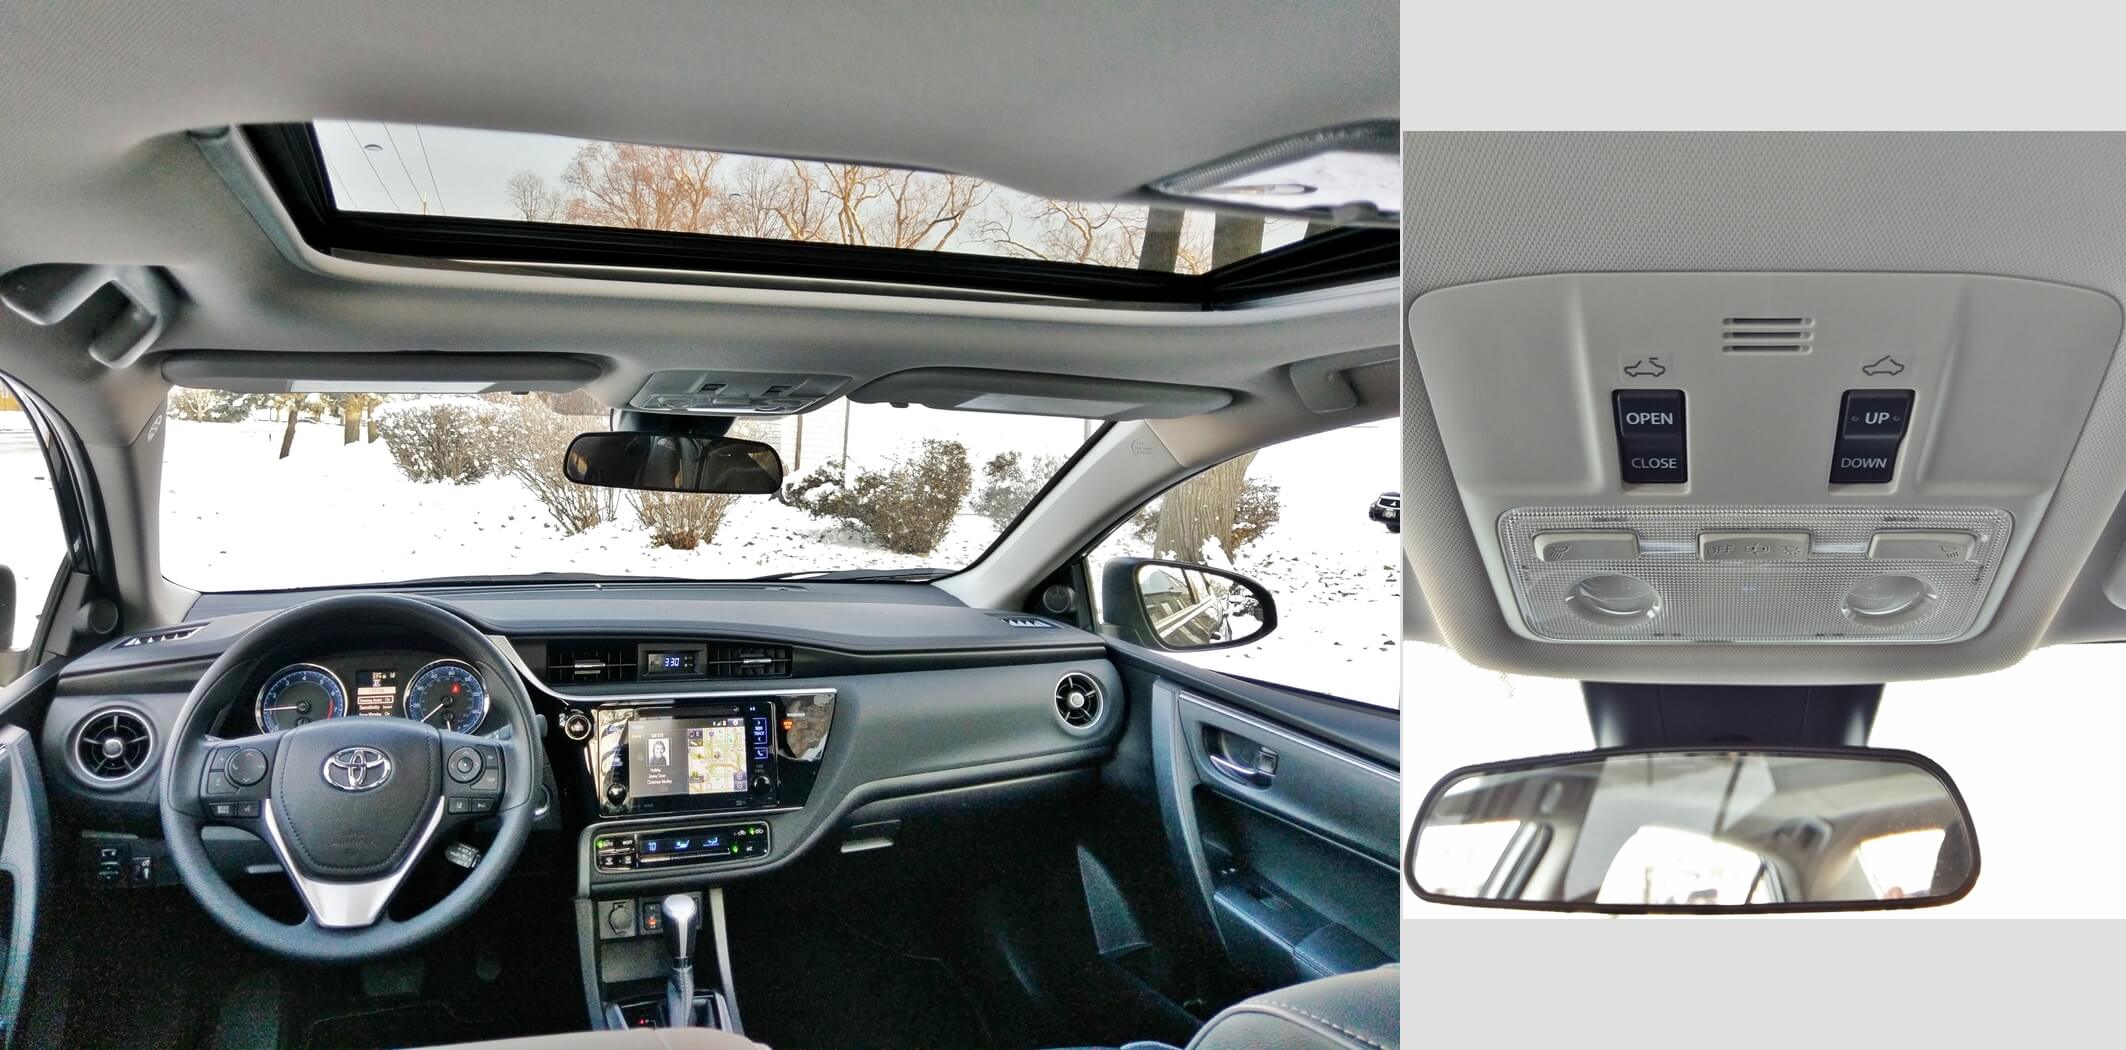 2018 Toyota Corolla XLE: Power moonroof impinges on cabin headroom